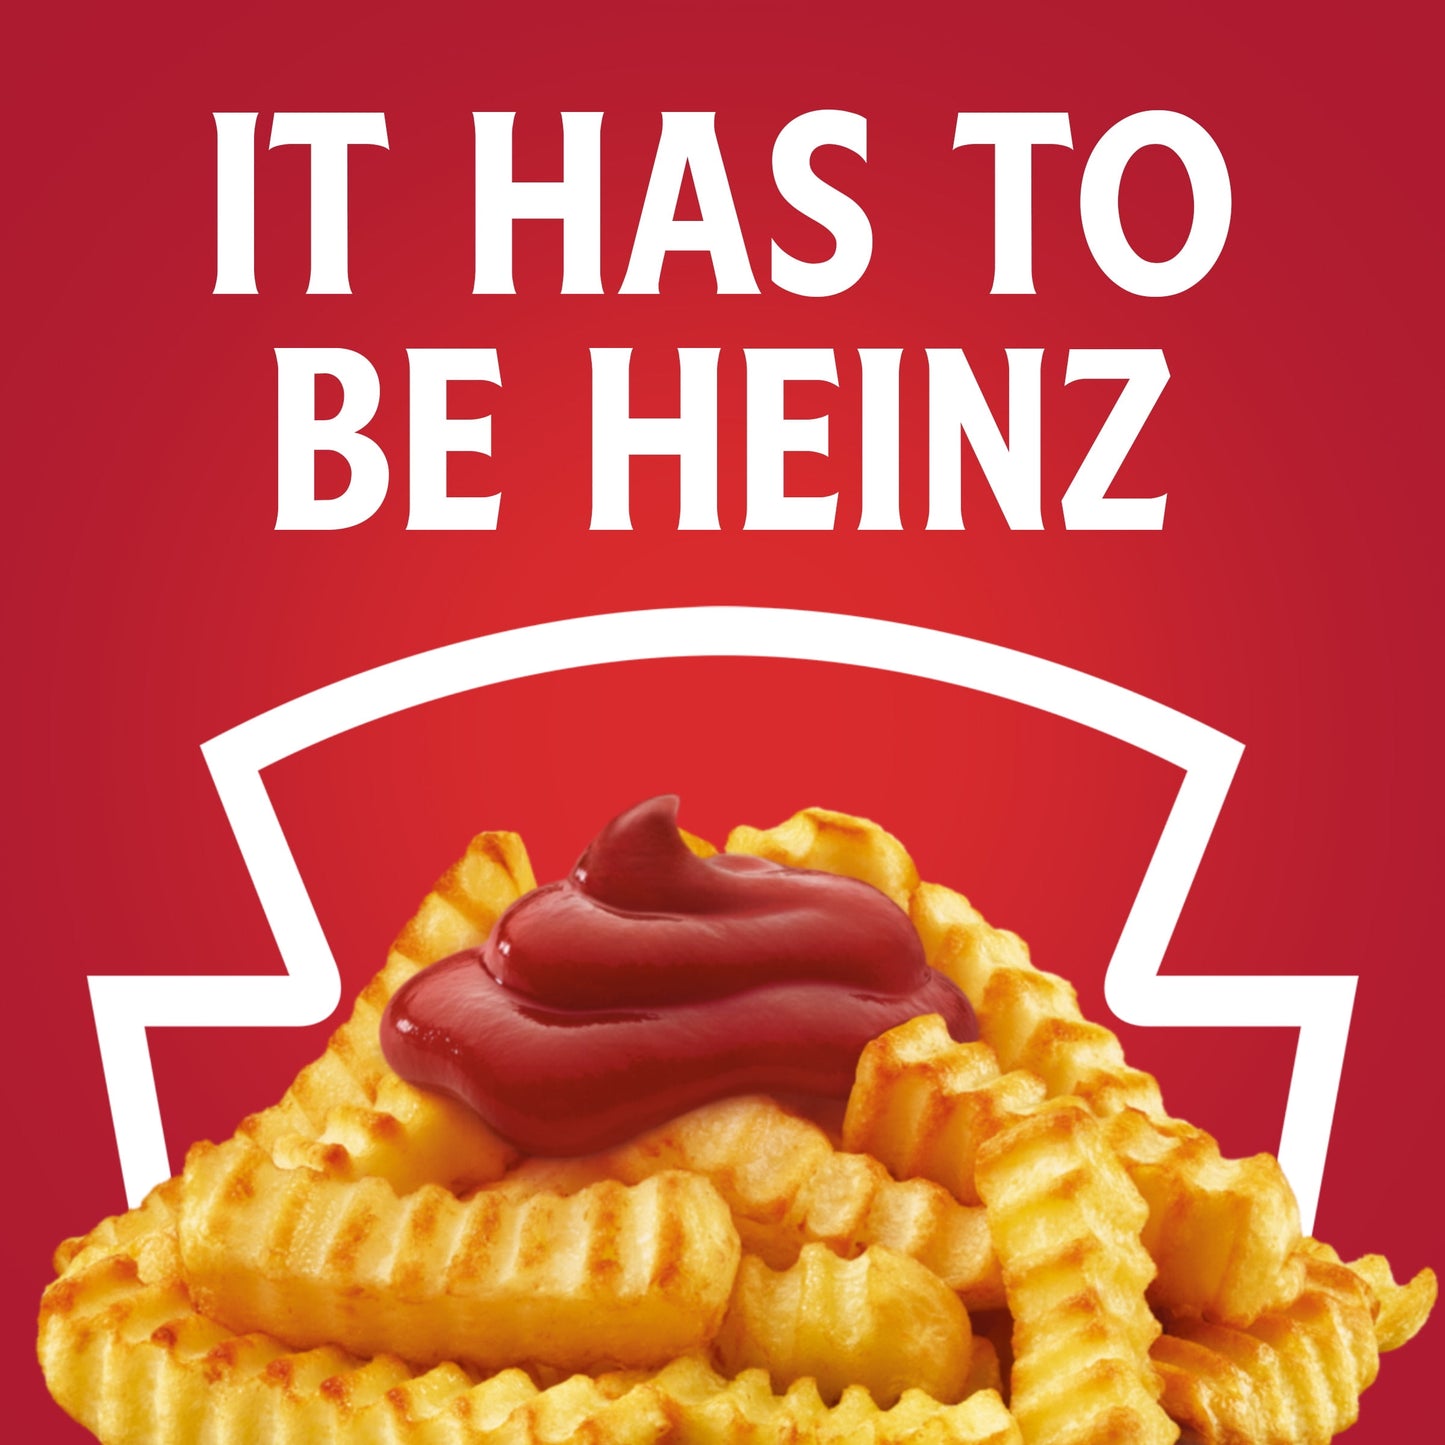 Heinz Tomato Ketchup, 32 oz Bottle